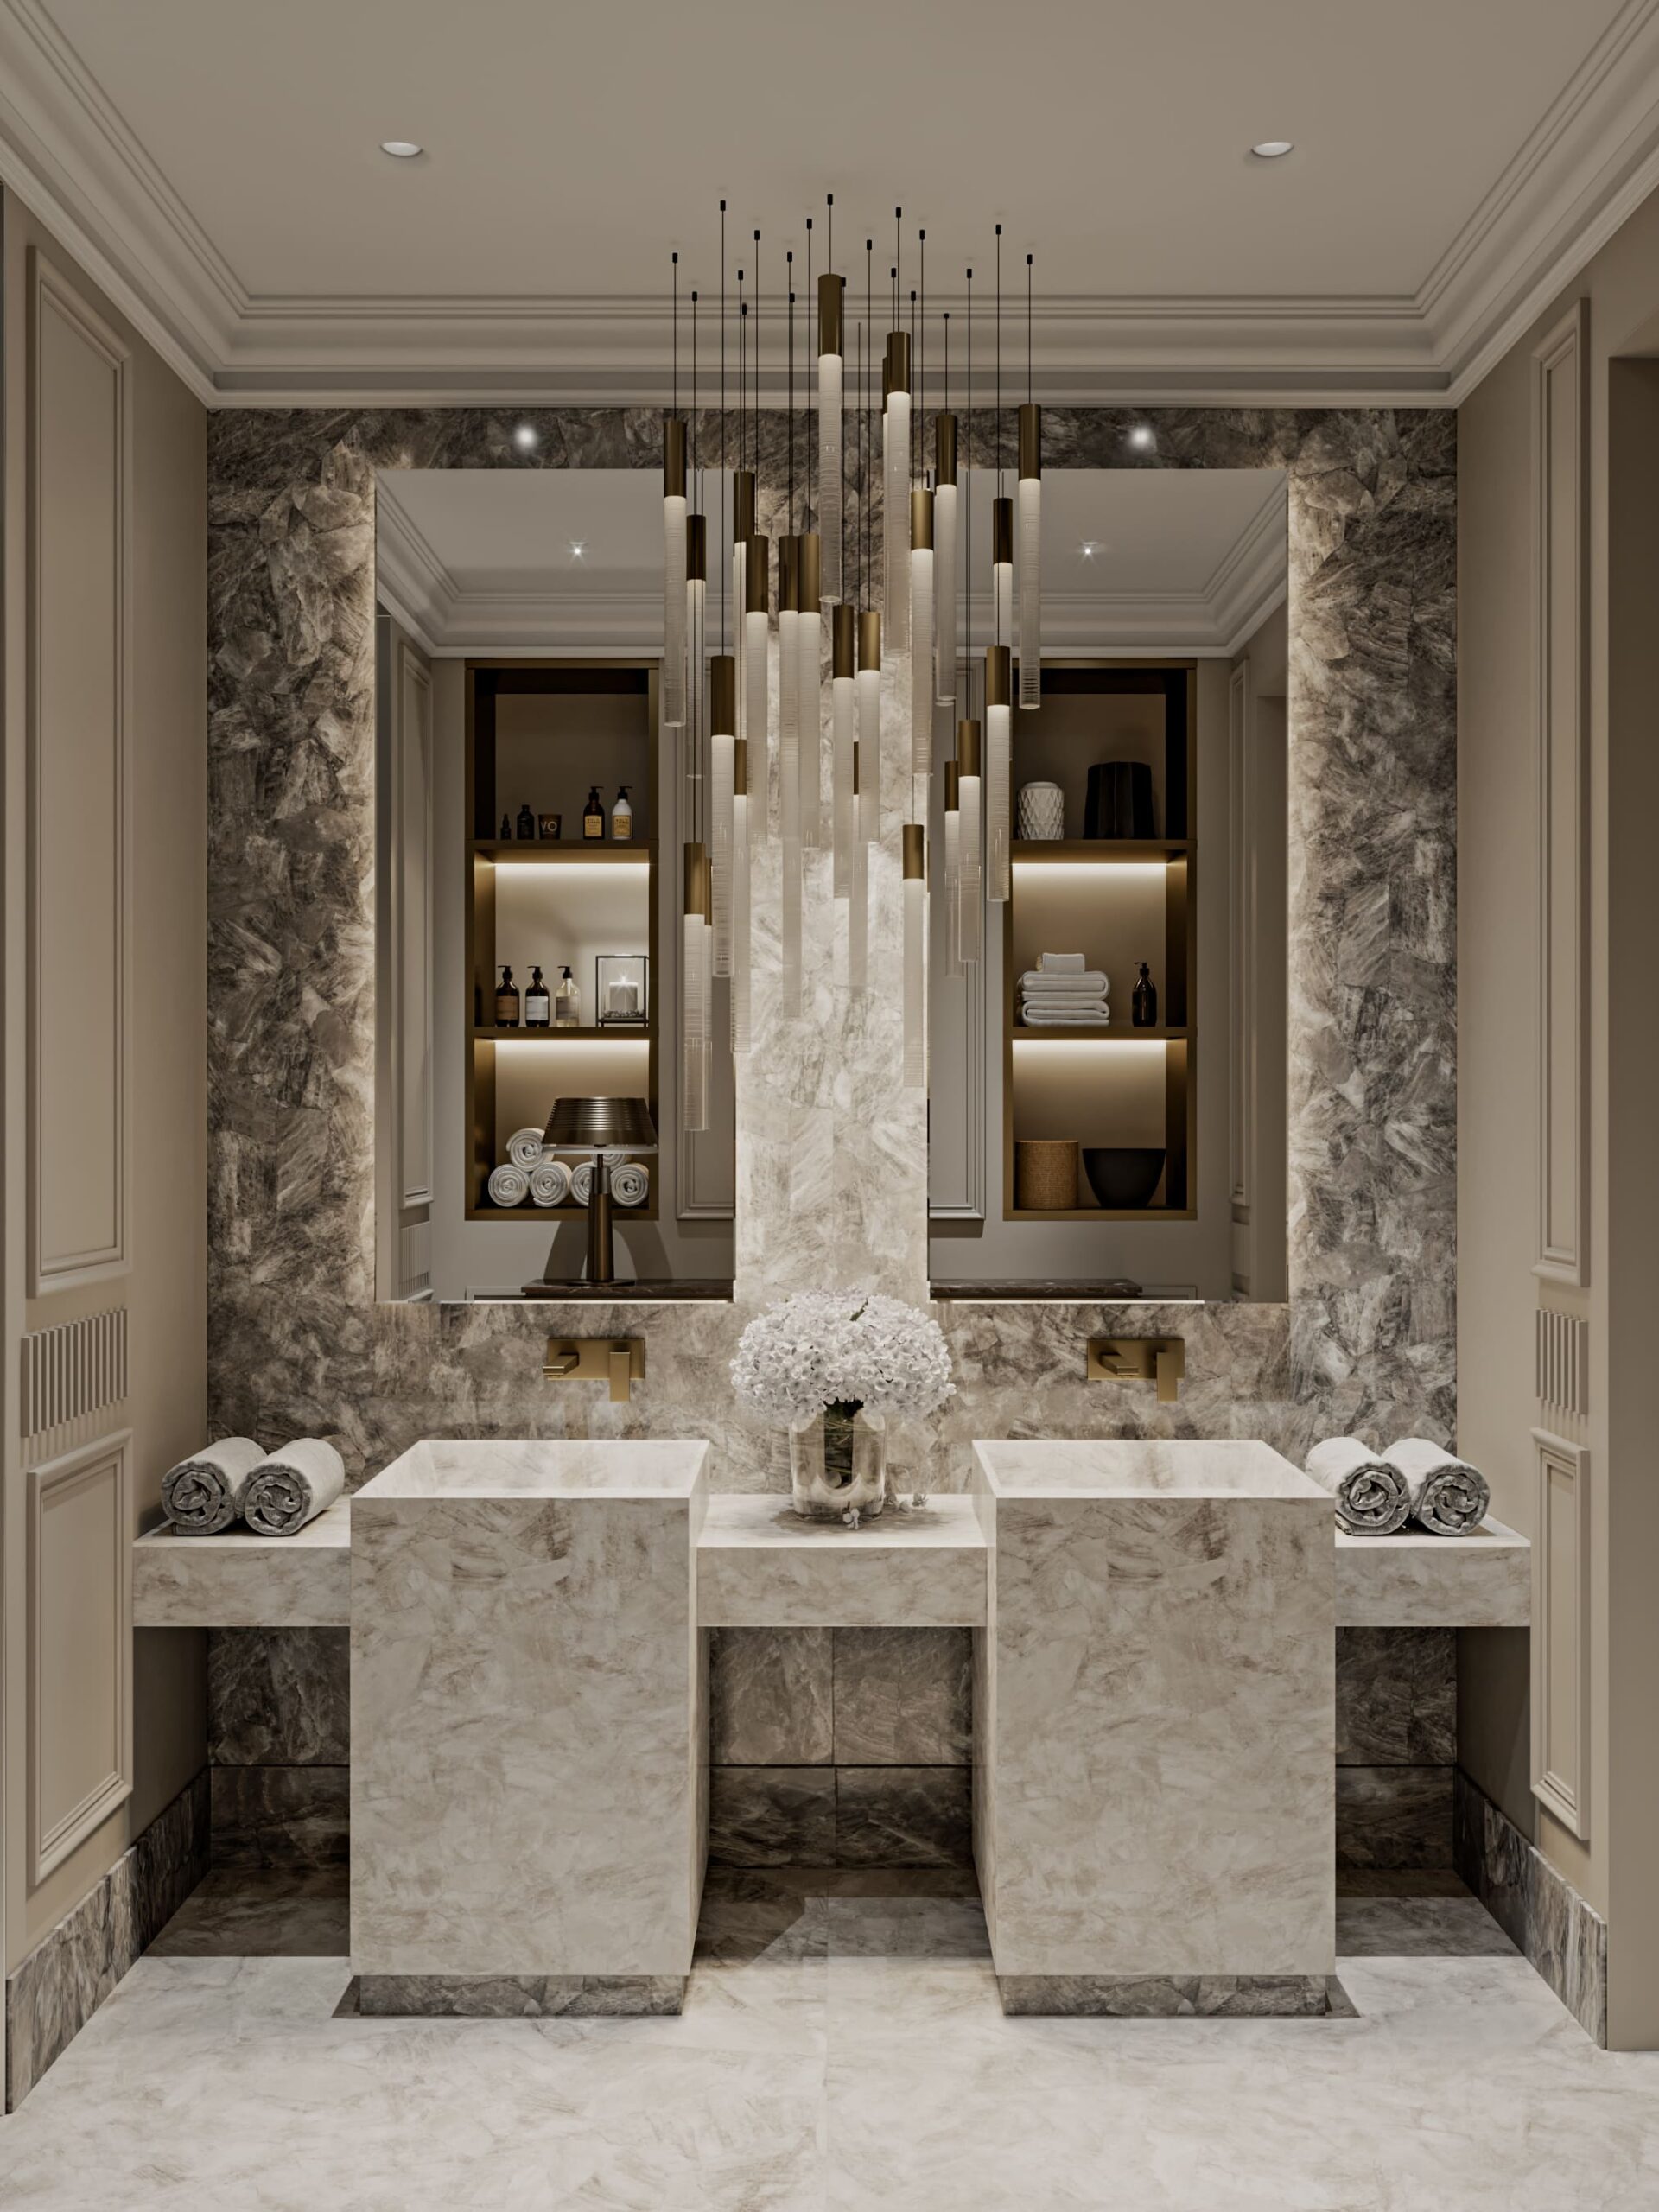 Interior design oth villa jumeirah pearl by kg design bathroom